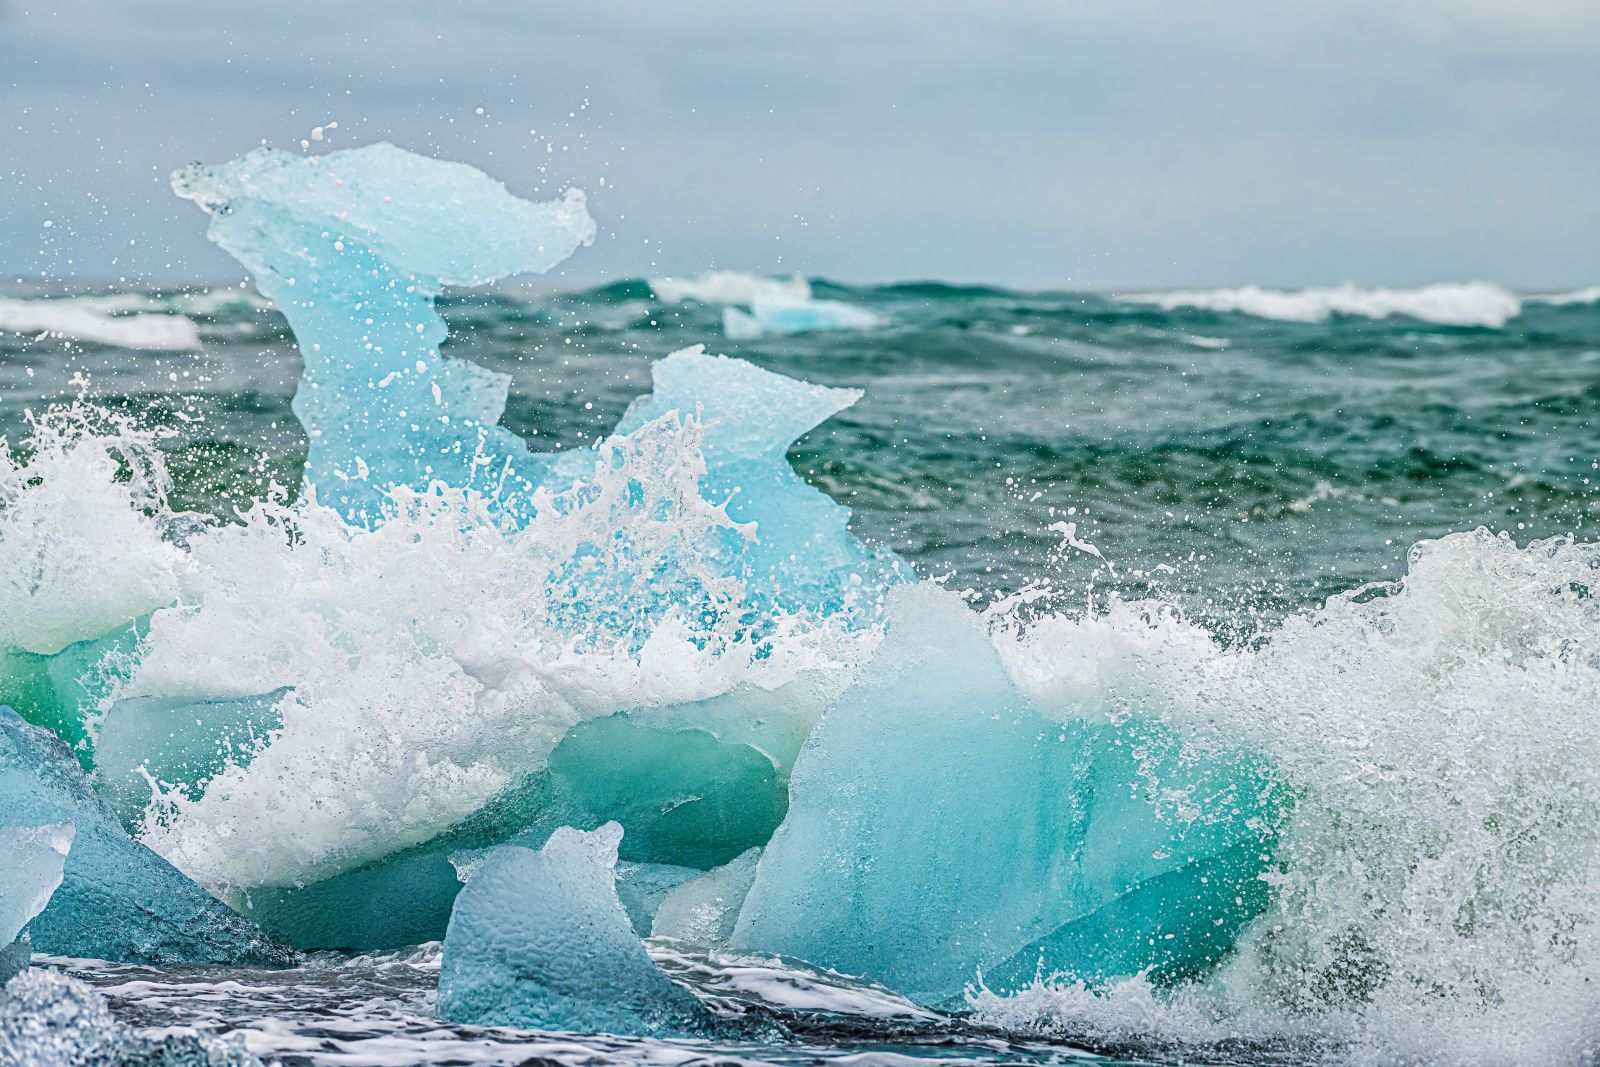 Waves crashing on Jokulsarlon Diamond Ice glacial beach in Iceland